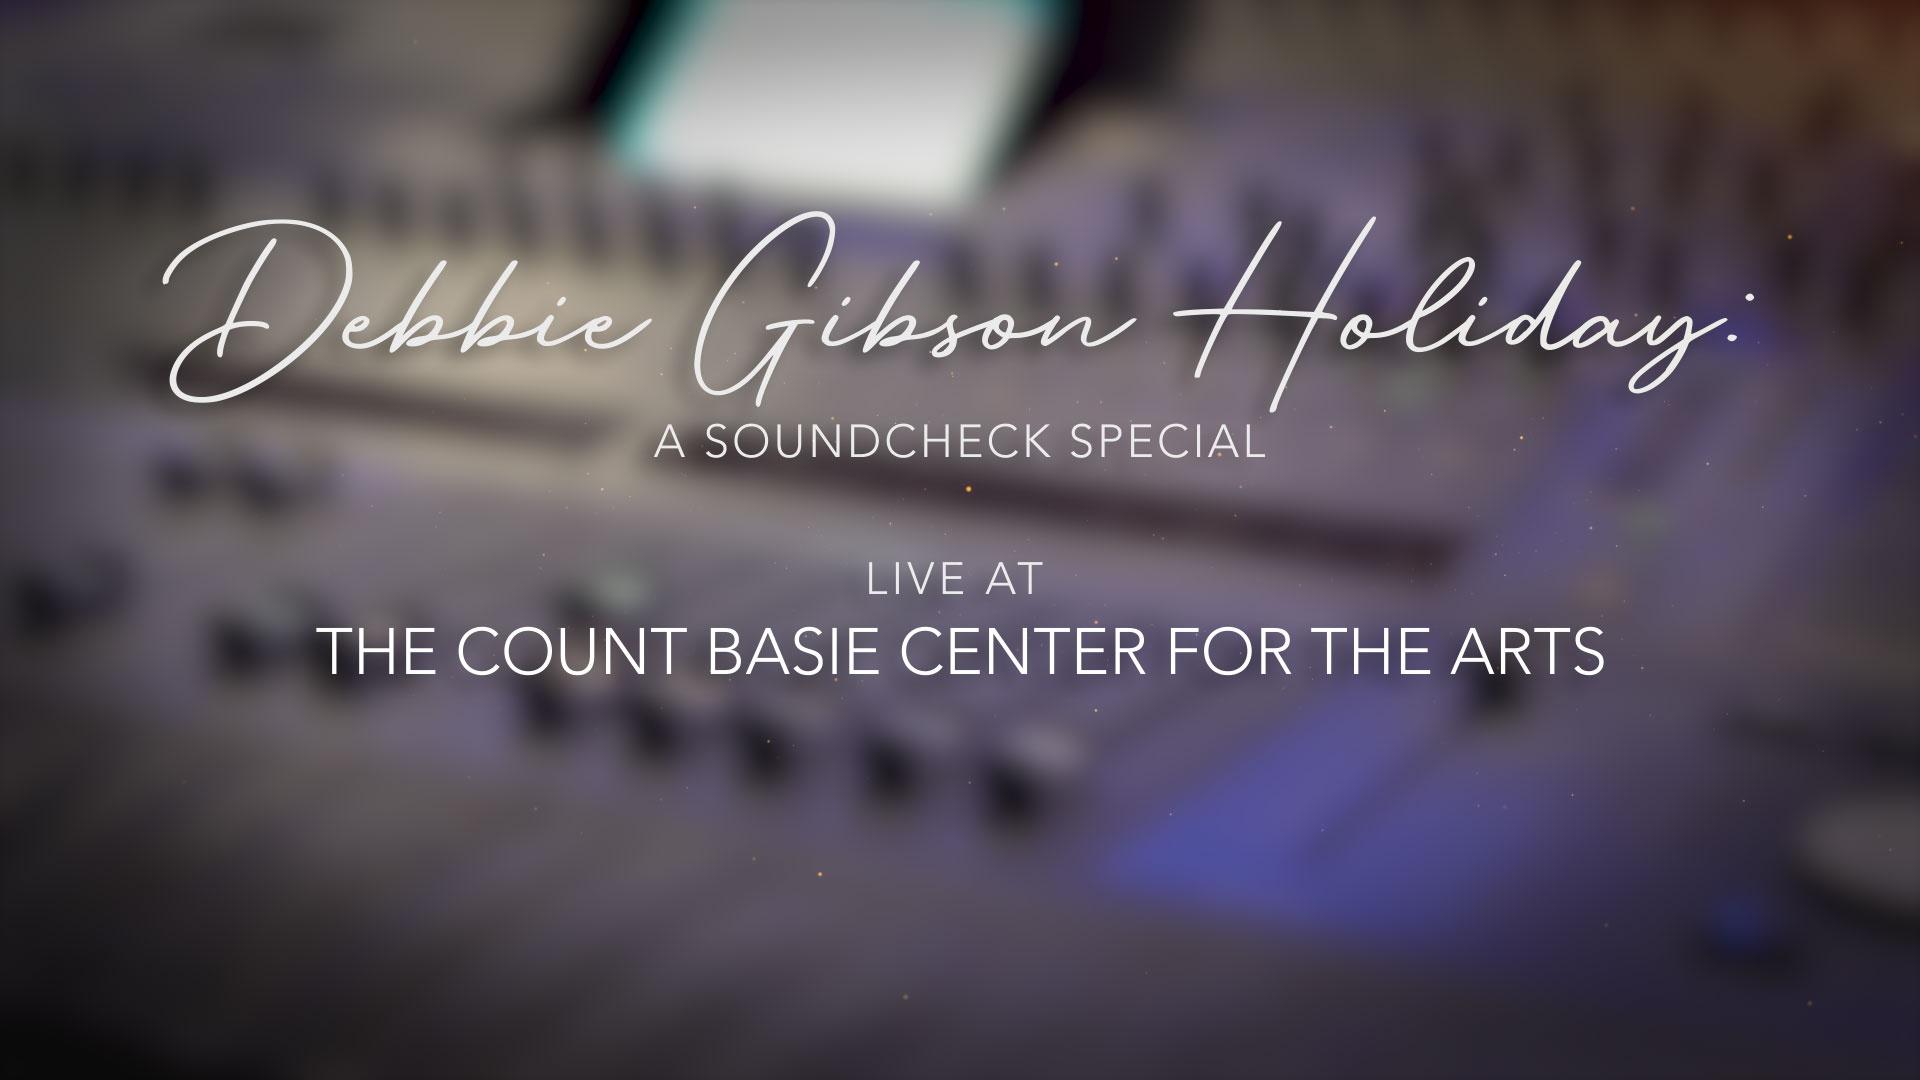 Debbie Gibson Holiday: A Soundcheck Special